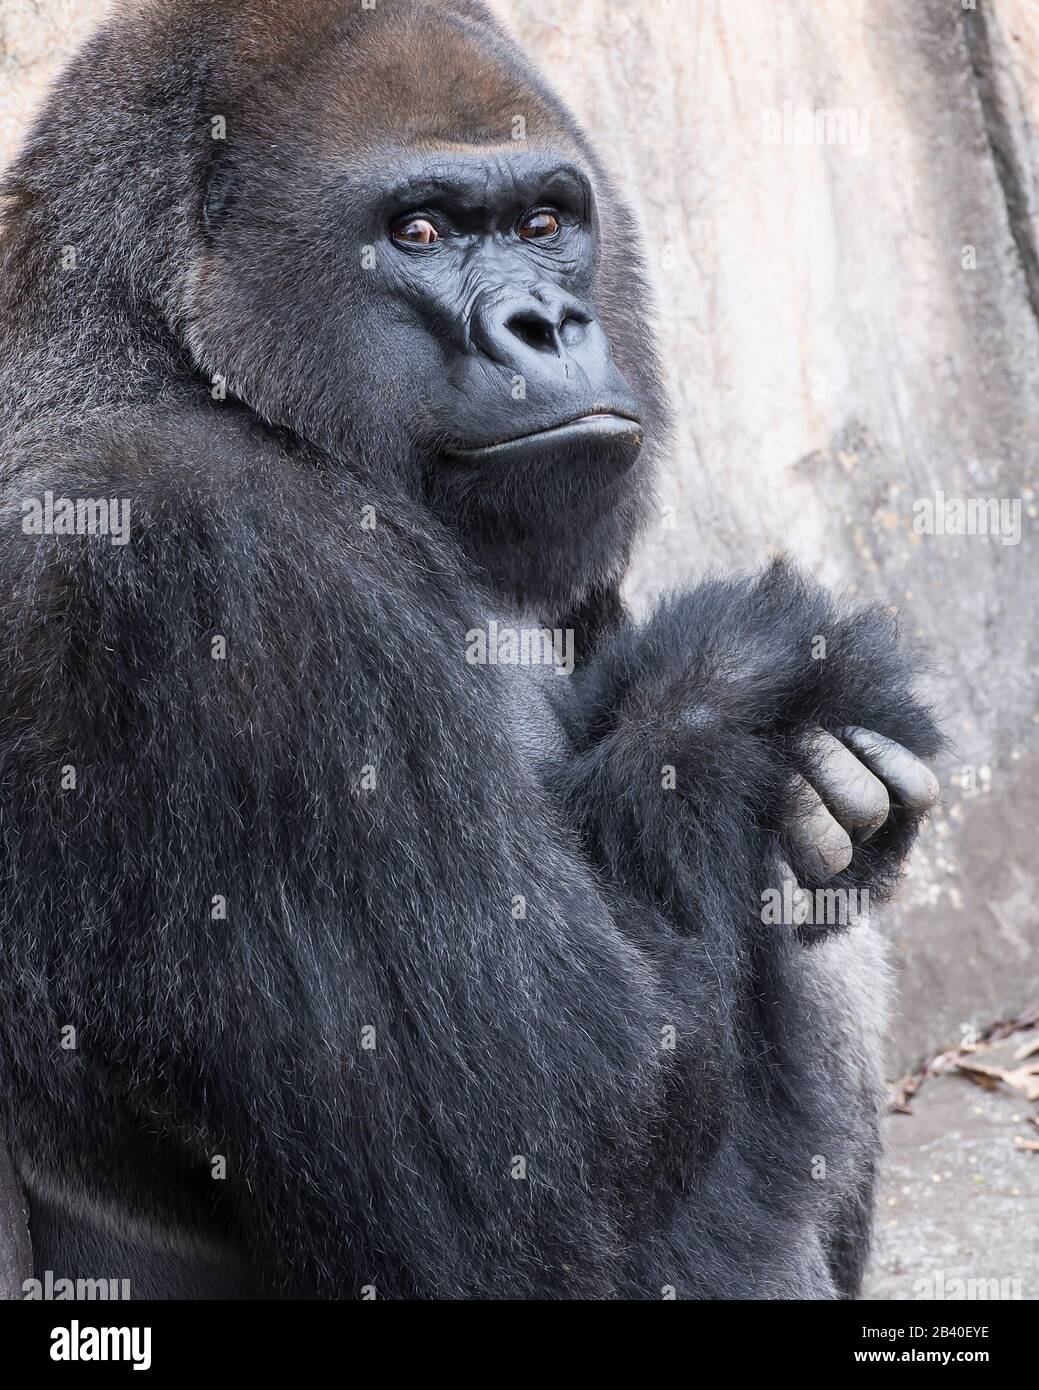 Close up of a massive, intimidating gorilla skeptically looking at the camera. Stock Photo